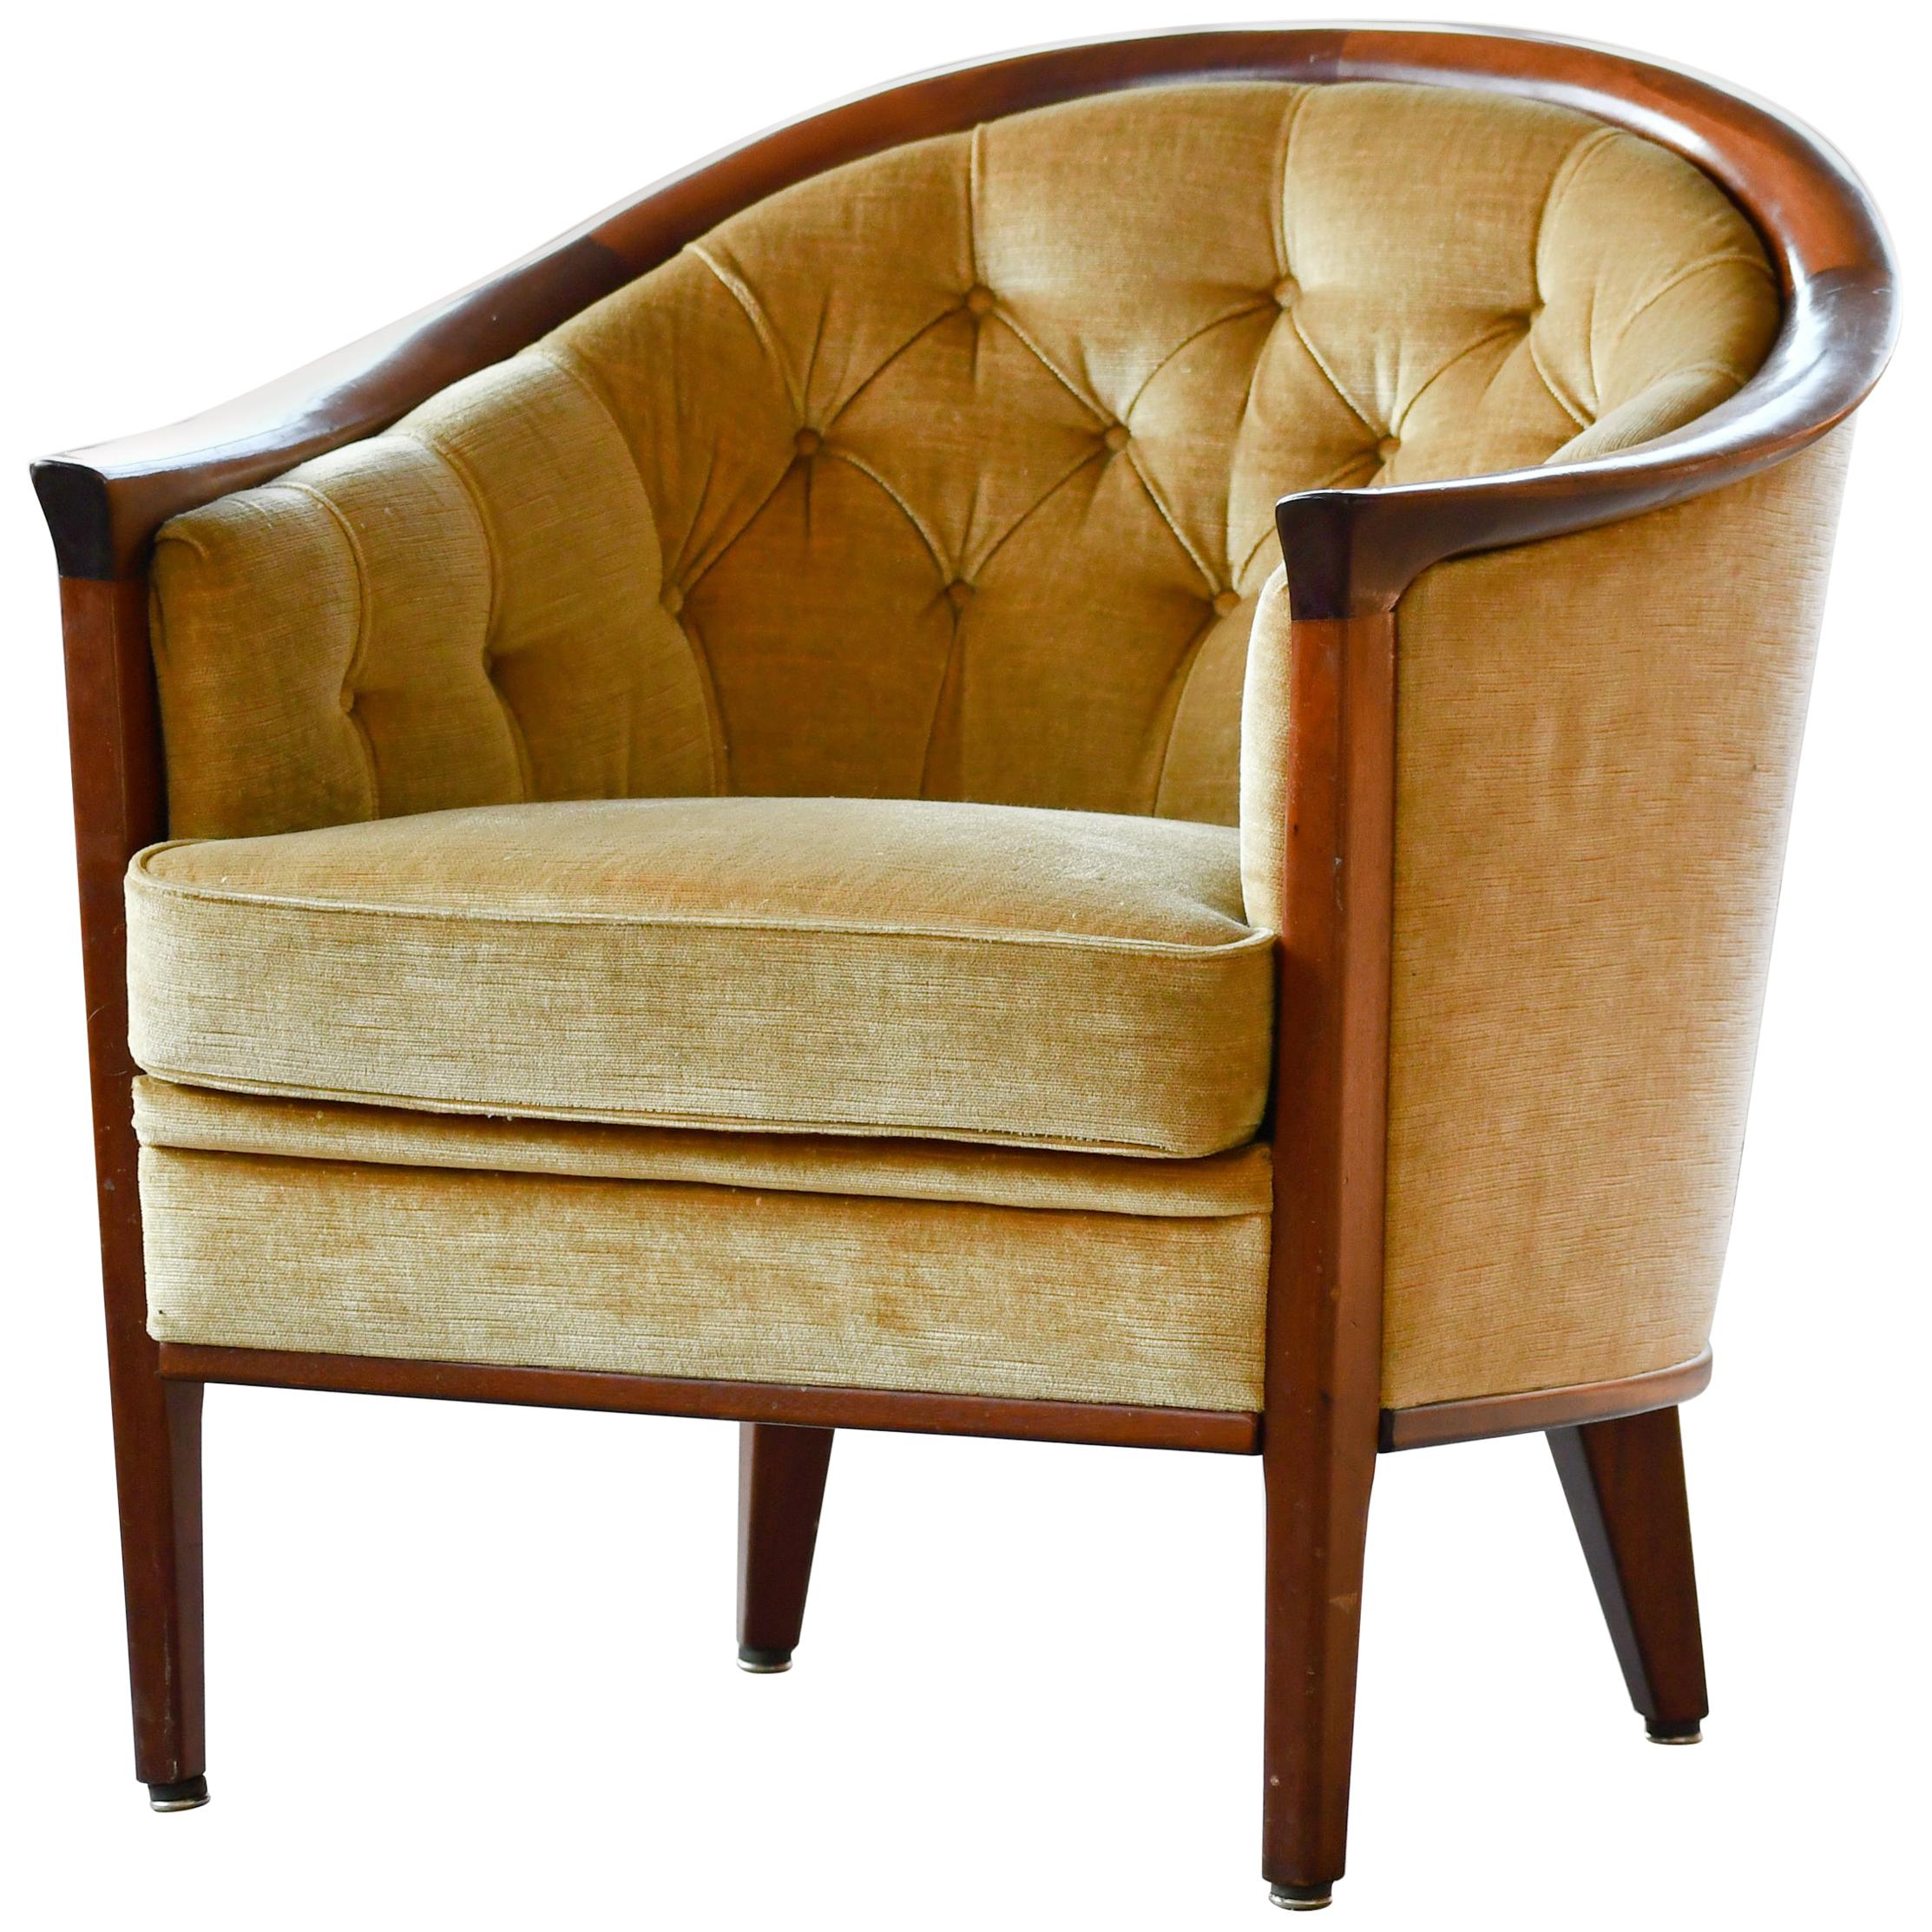 Pair of Midcentury Lounge Chairs Model "Aristokrat" by Bertil Fridhagen